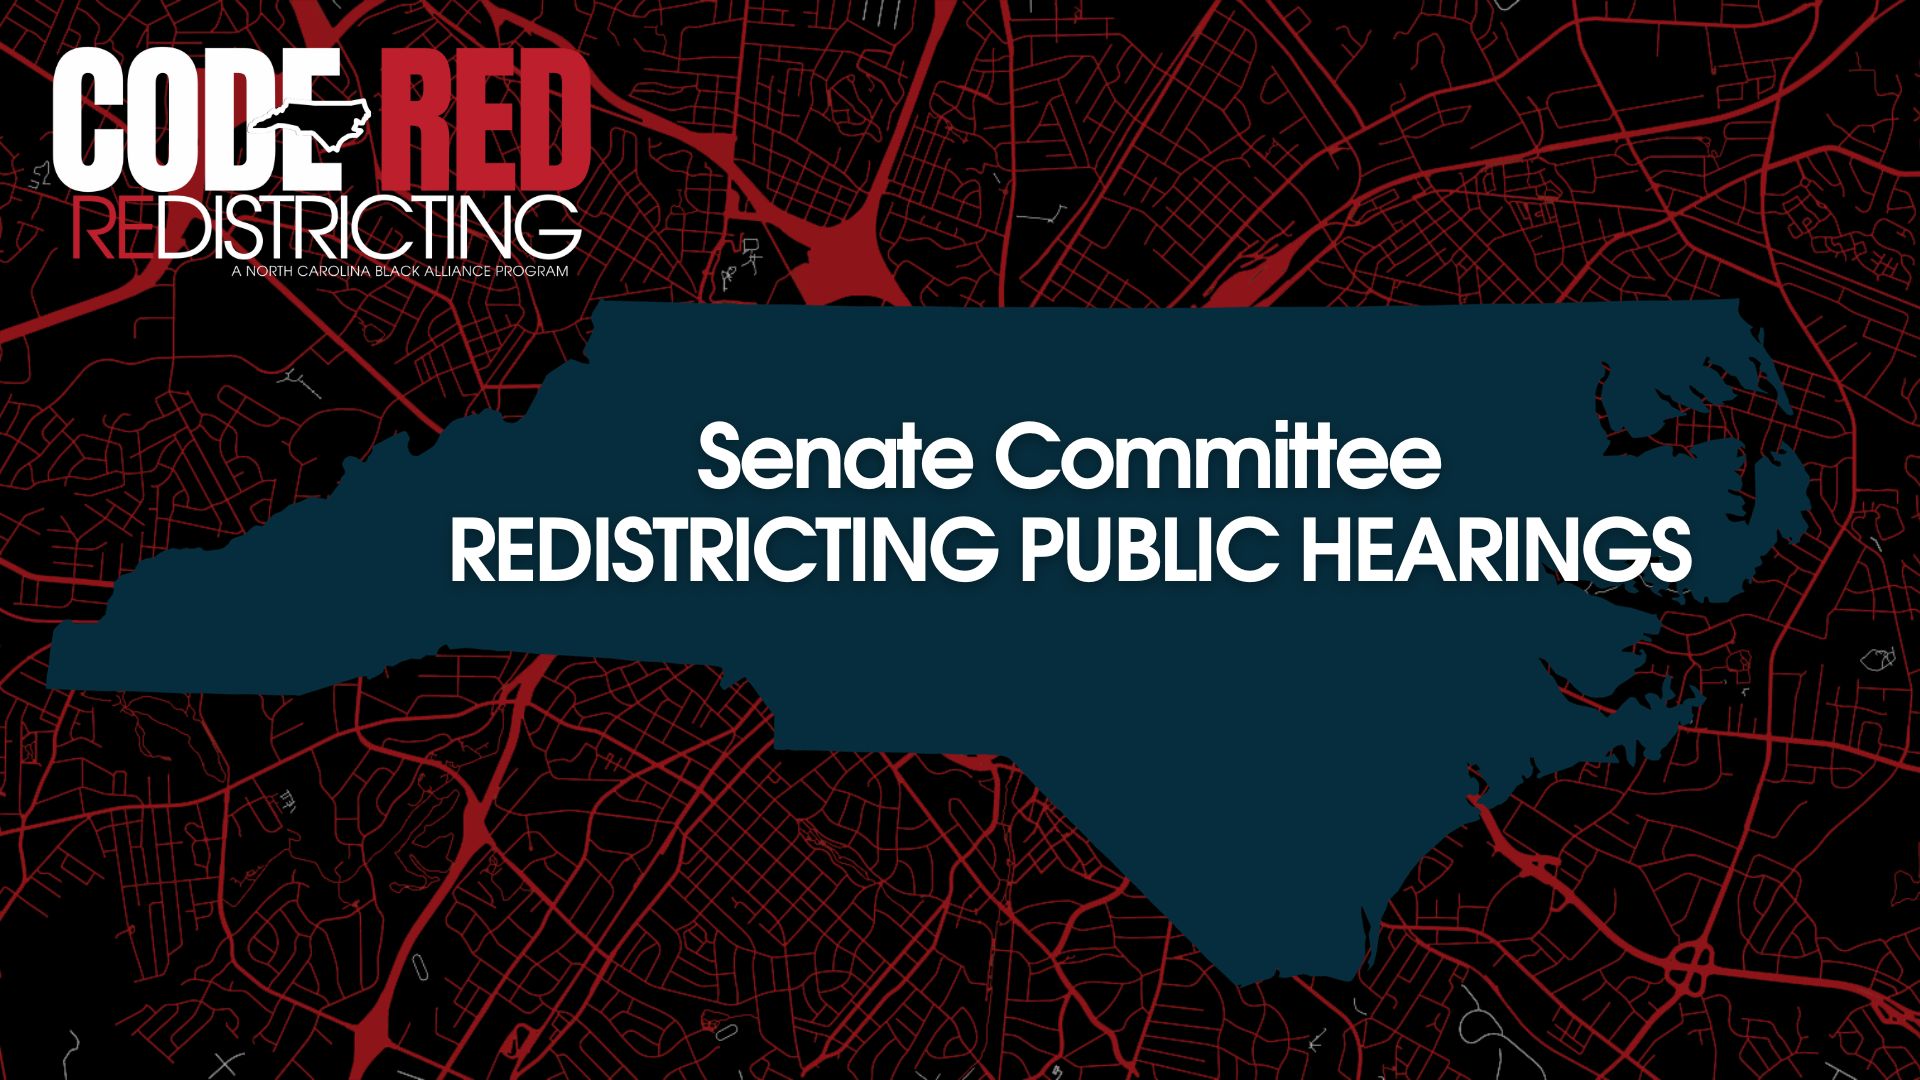 CODE RED: Senate Committee Redistricting Public Hearings